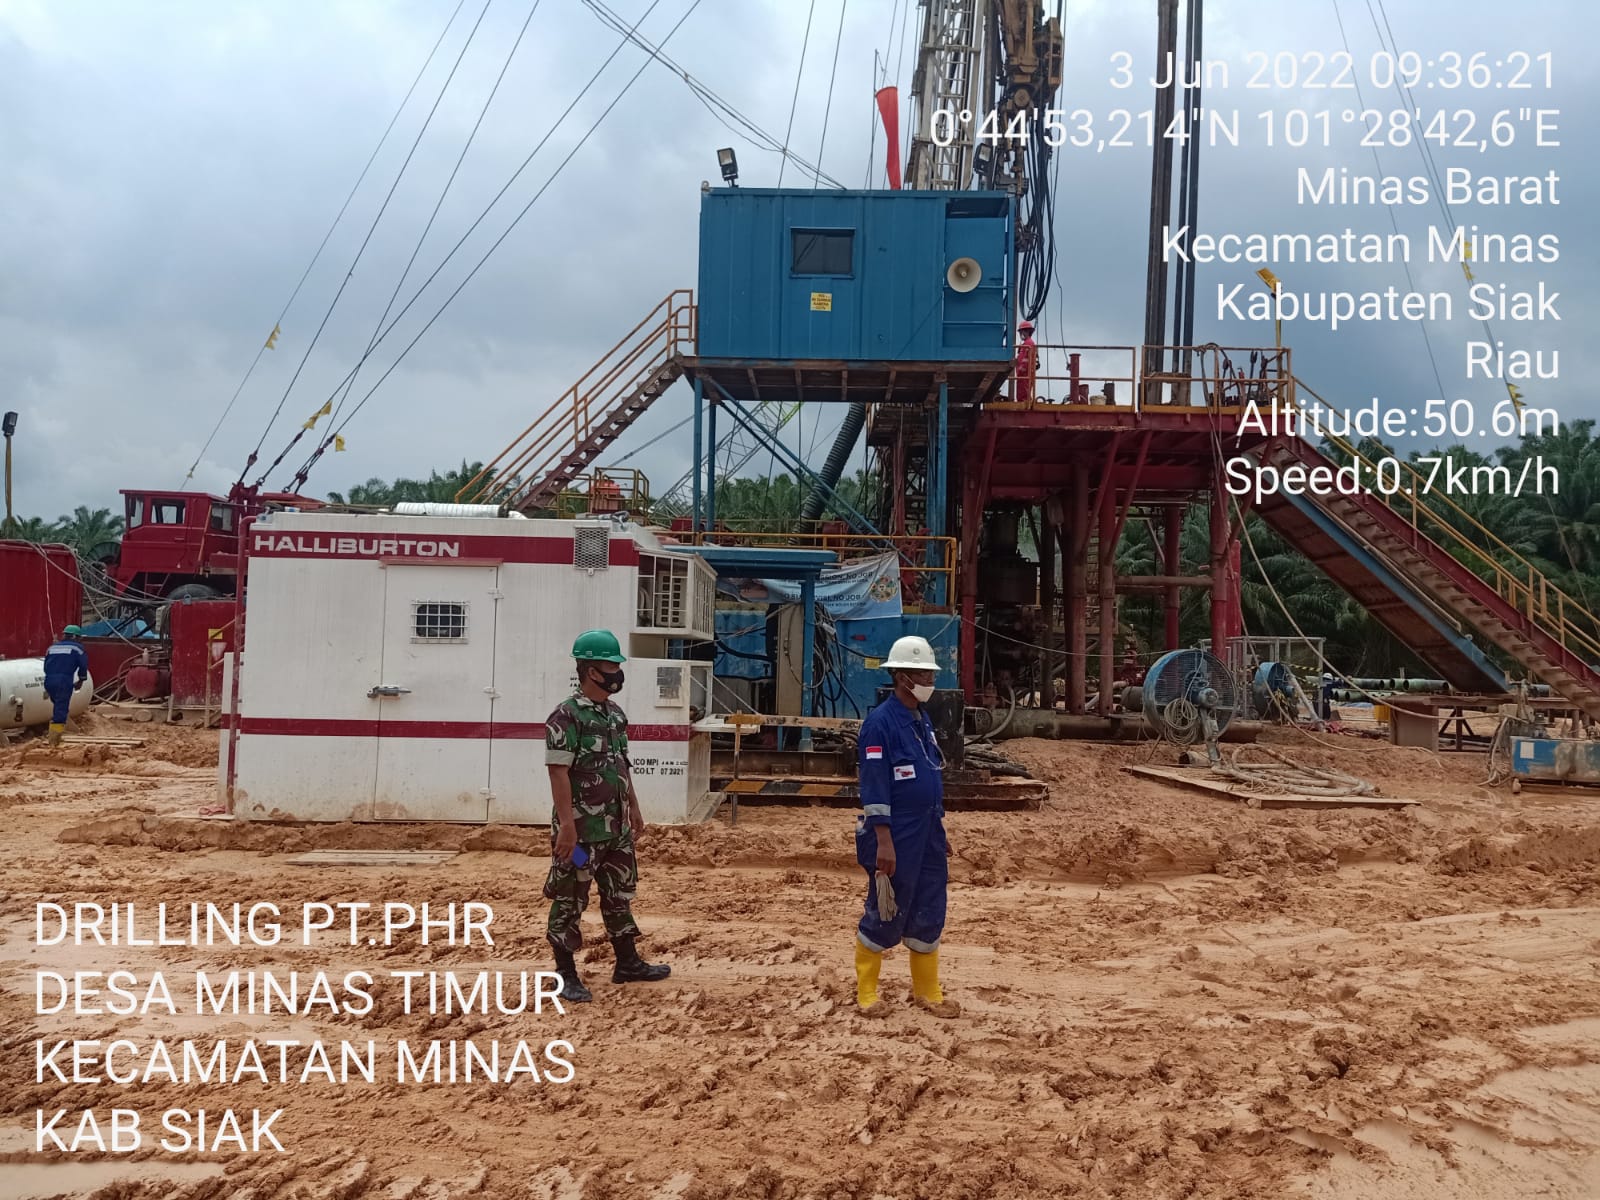 Sertu Ardhi Syam & Sertu Susiawan Giat Patroli Drilling di Area PT PHR Minas